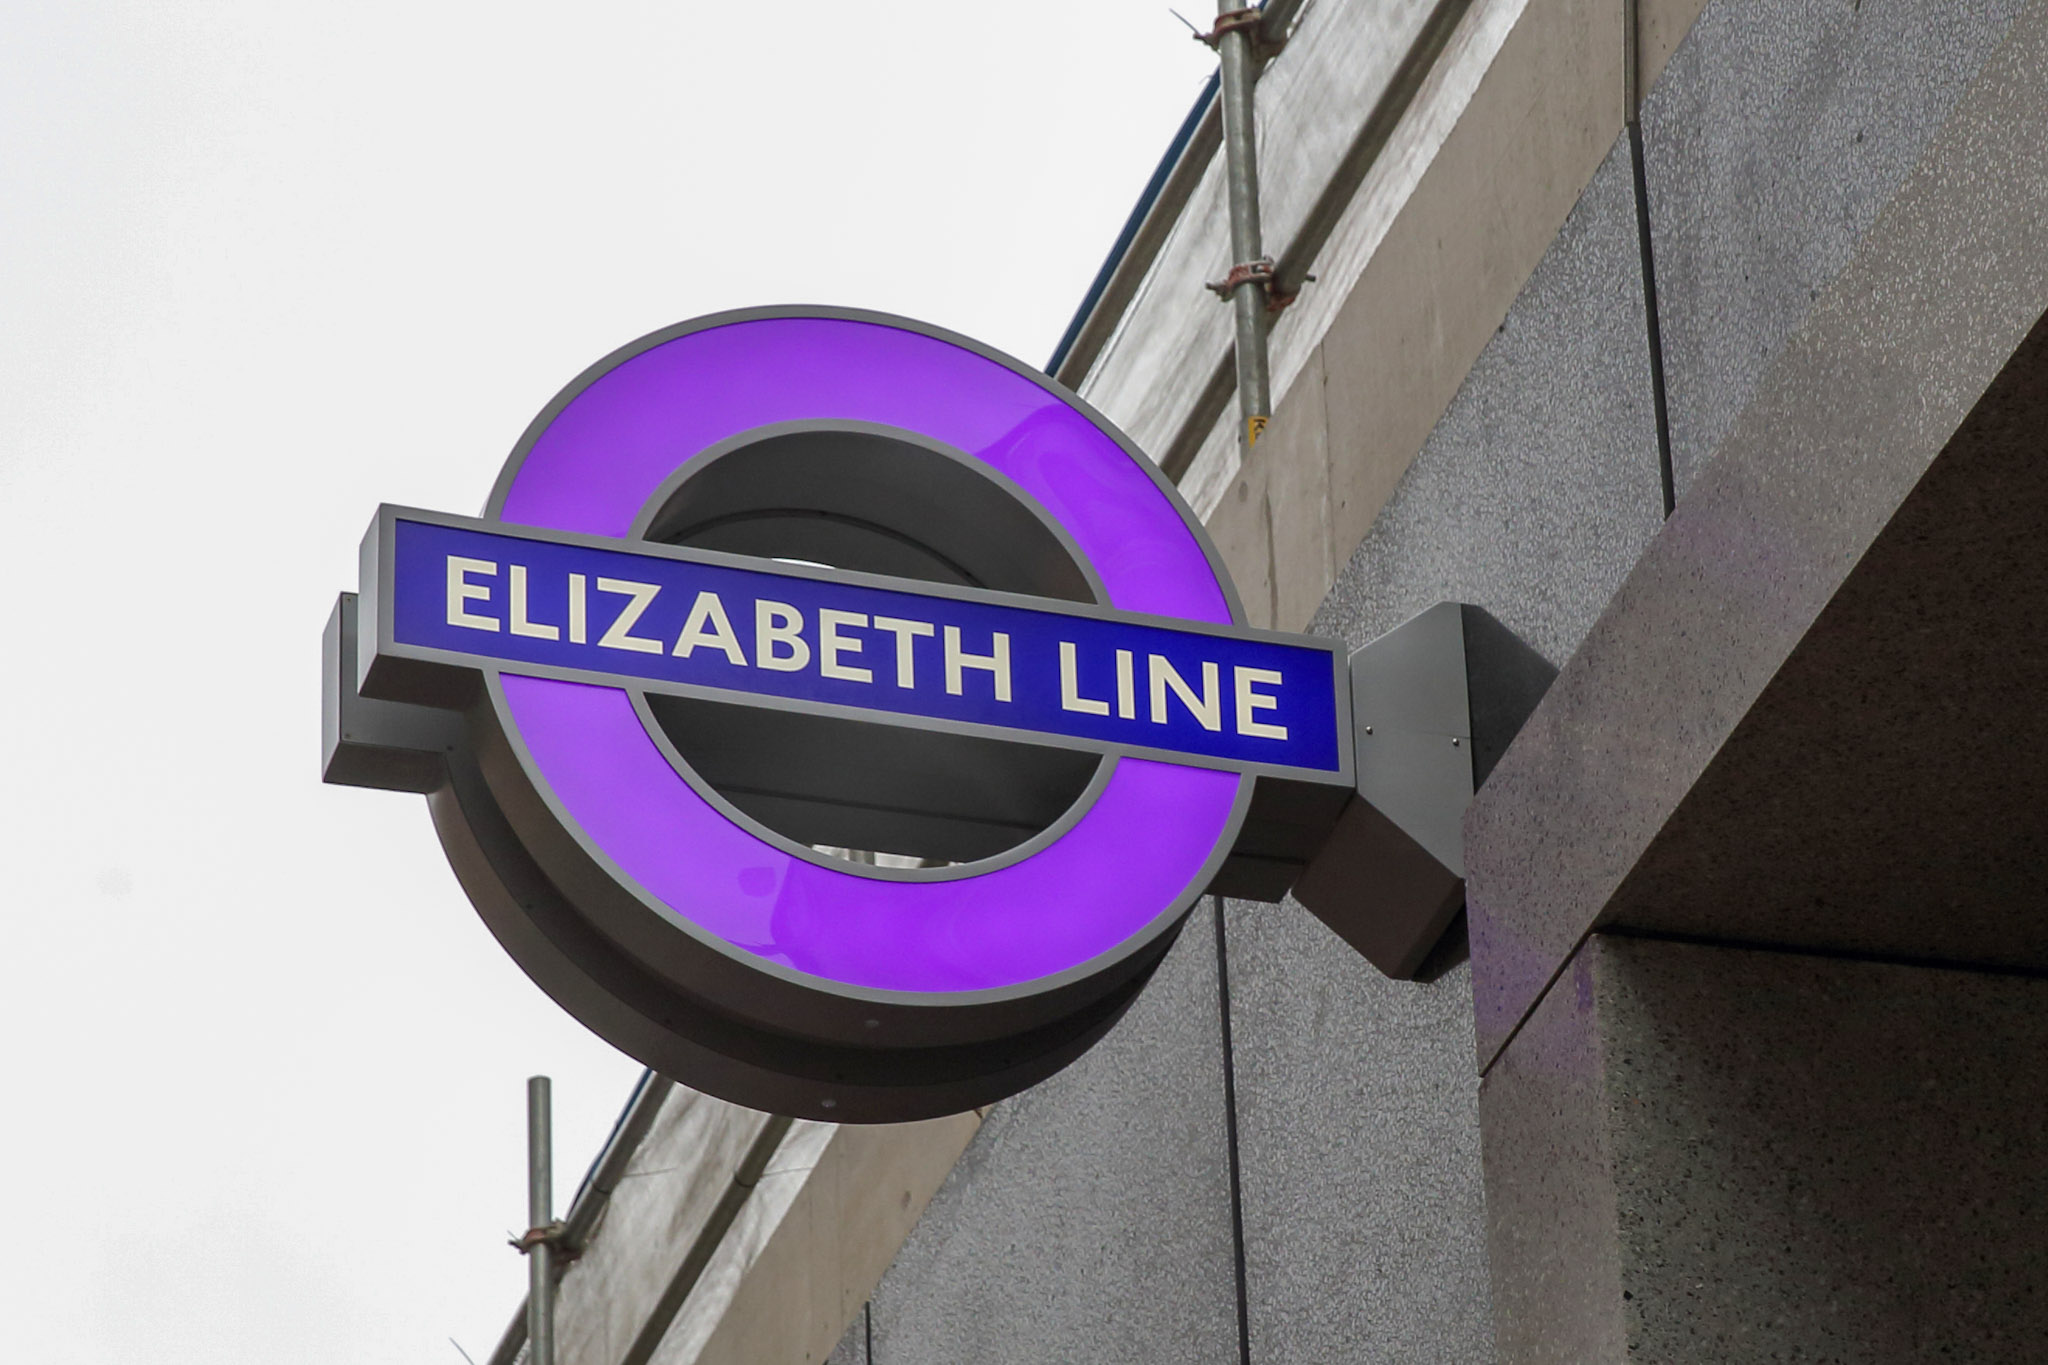 photo of an Elizabeth line station roundel